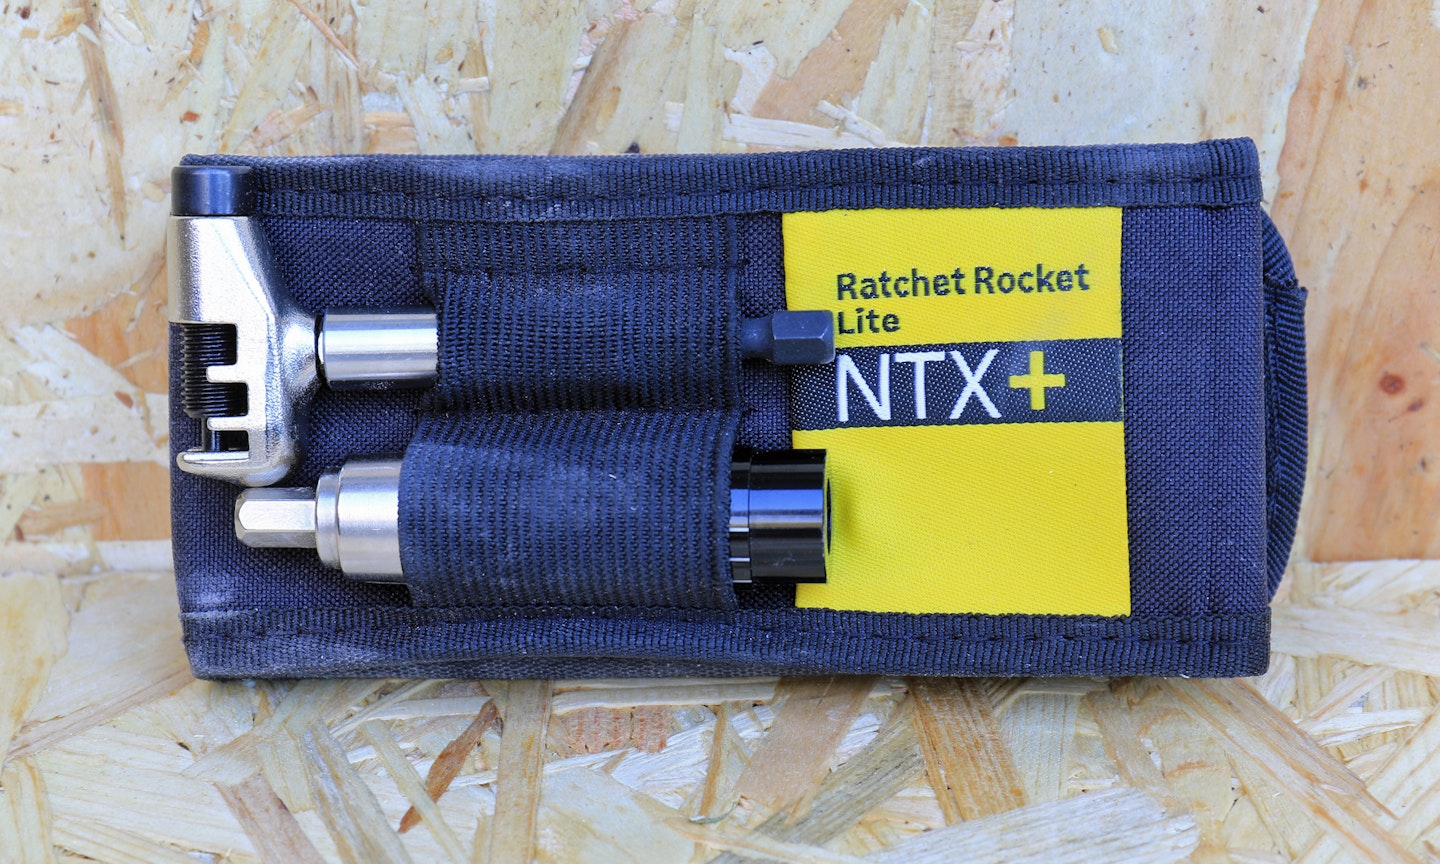 Topeak Ratchet Rocket Lite NTX+ in the wrap